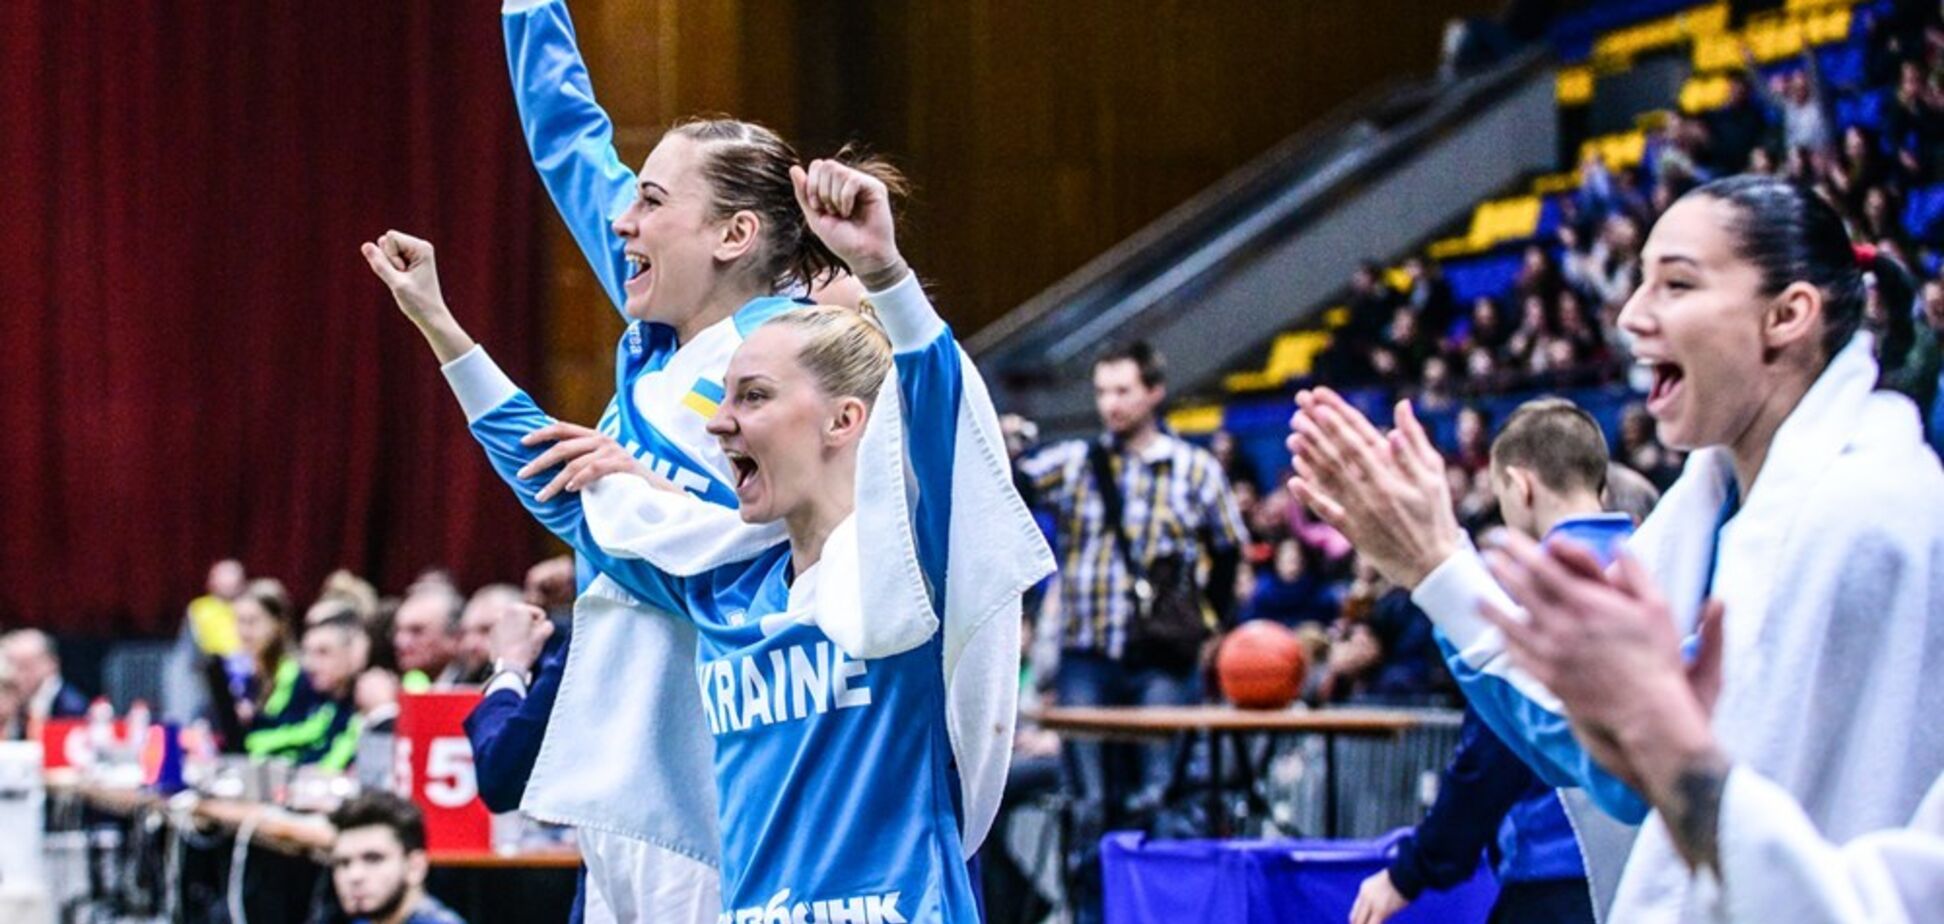 Жеребьевка женского Евробаскета-2019: стала известна корзина для Украины